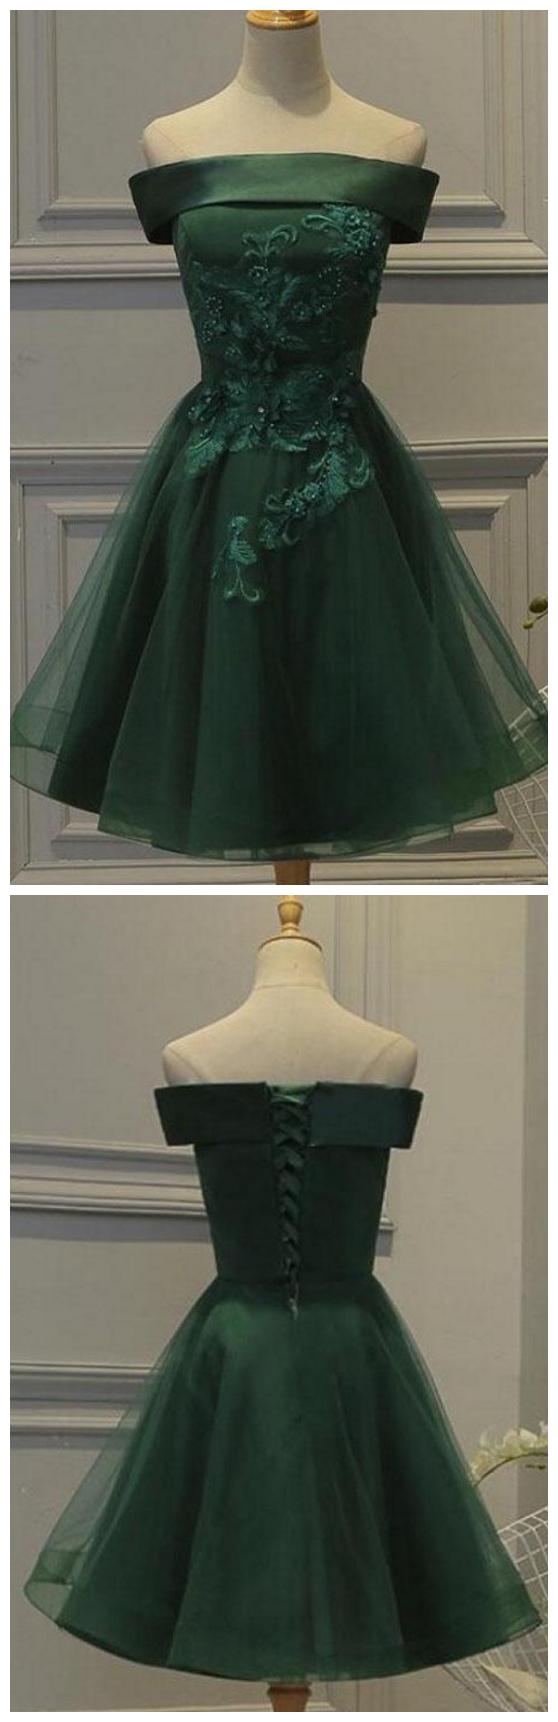 Dark Green Off The Shoulder Tulle Homecoming Dress, A Line Appliqued Short Prom Dress